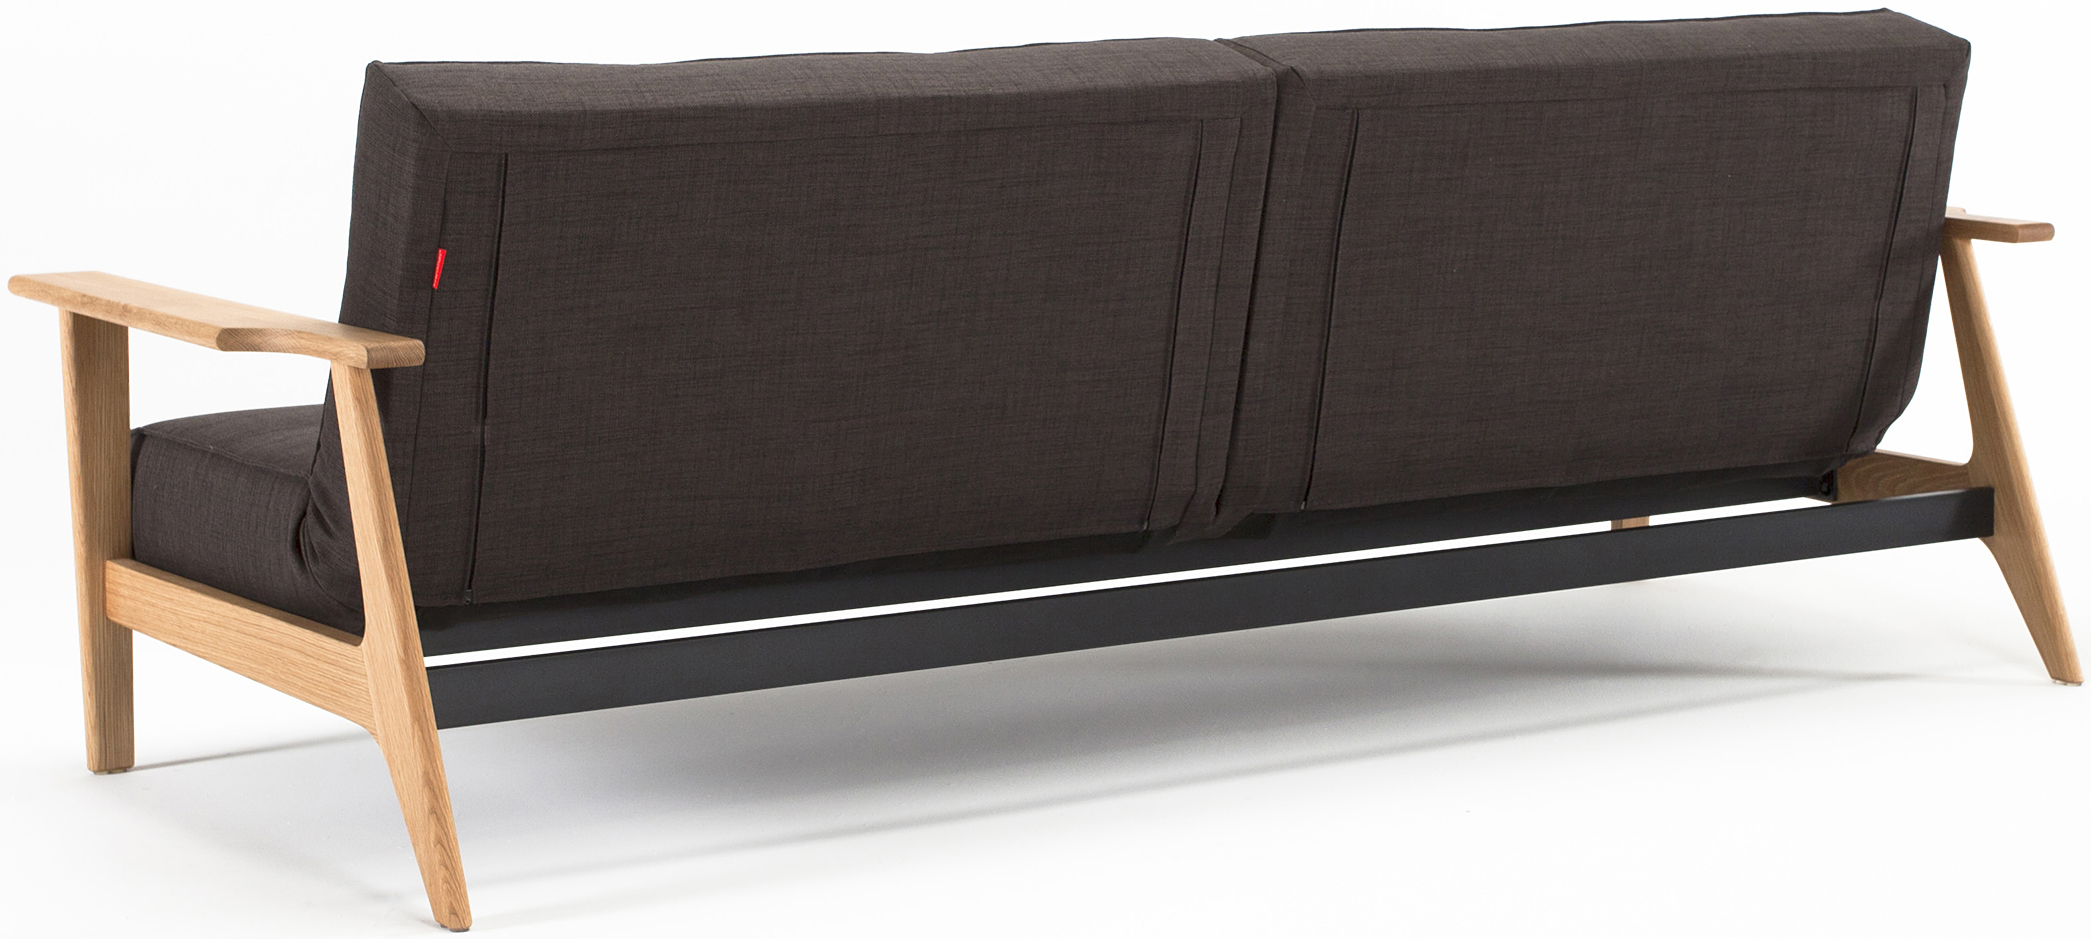 innovation living sofa splitback begum dark brown